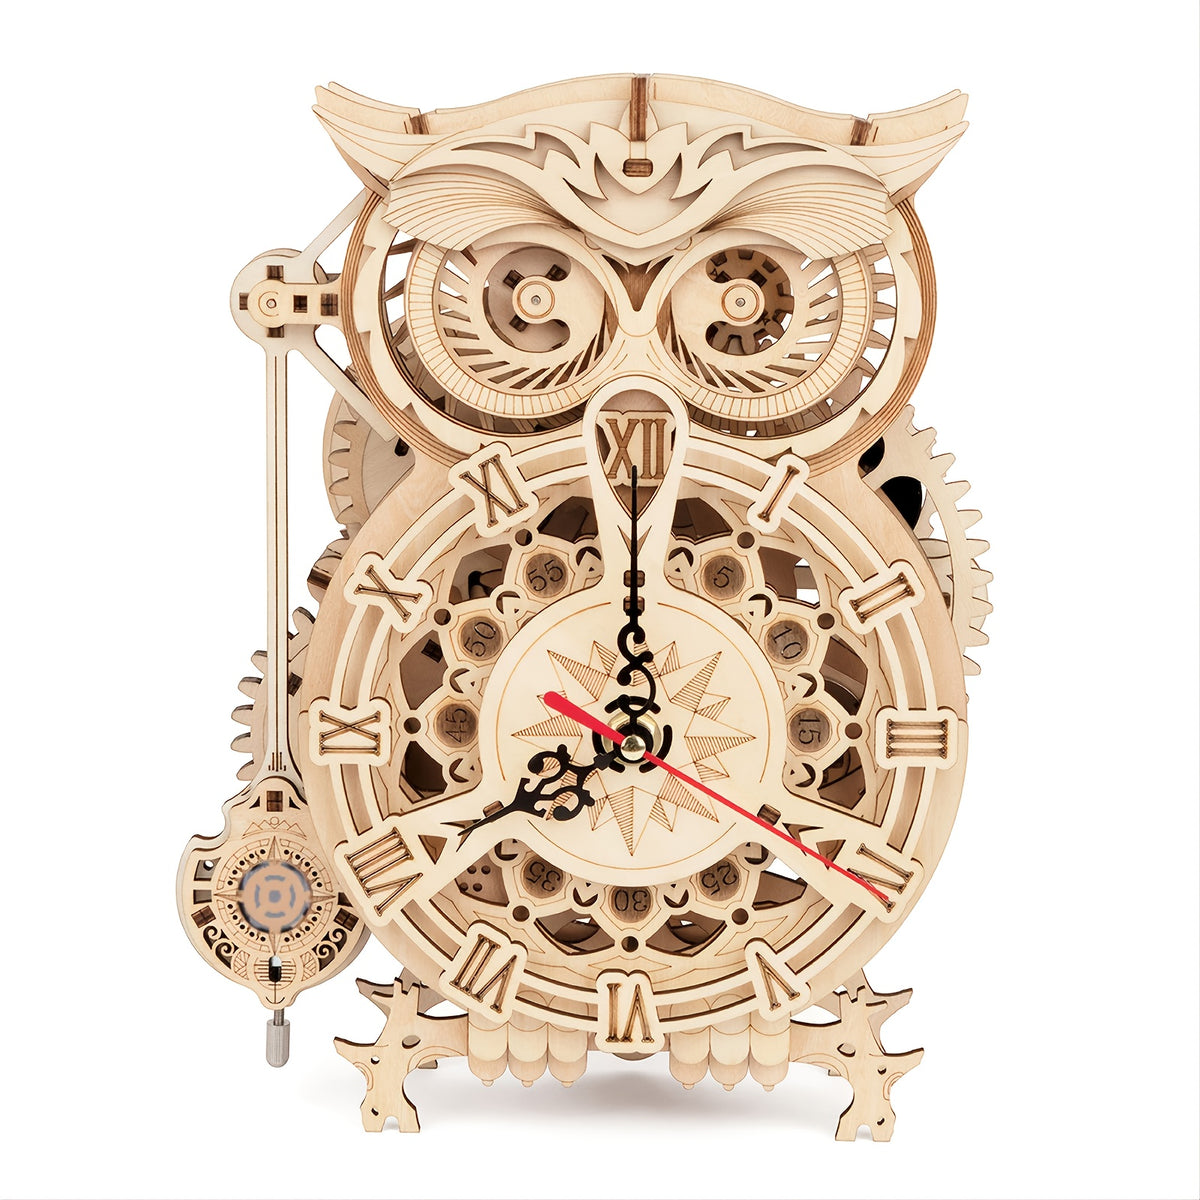 3D Wooden Puzzle Owl Clock Model Kit Desk Clock Home Decor Unique Gift Cykapu